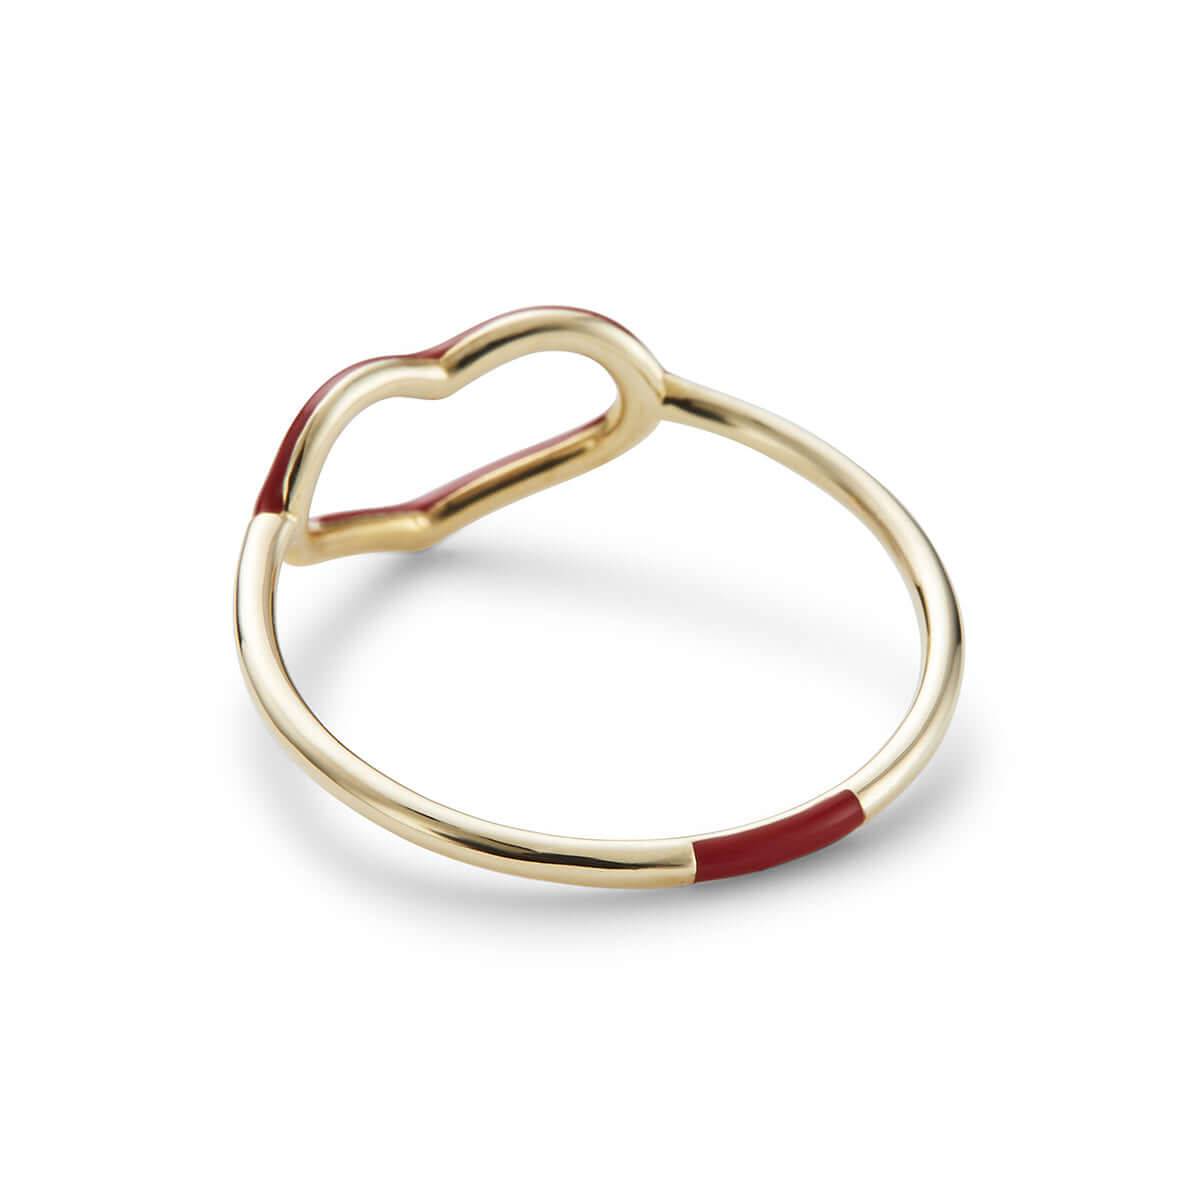 Ruby Heart Ring - Jordan Askill - Ileana Makri store